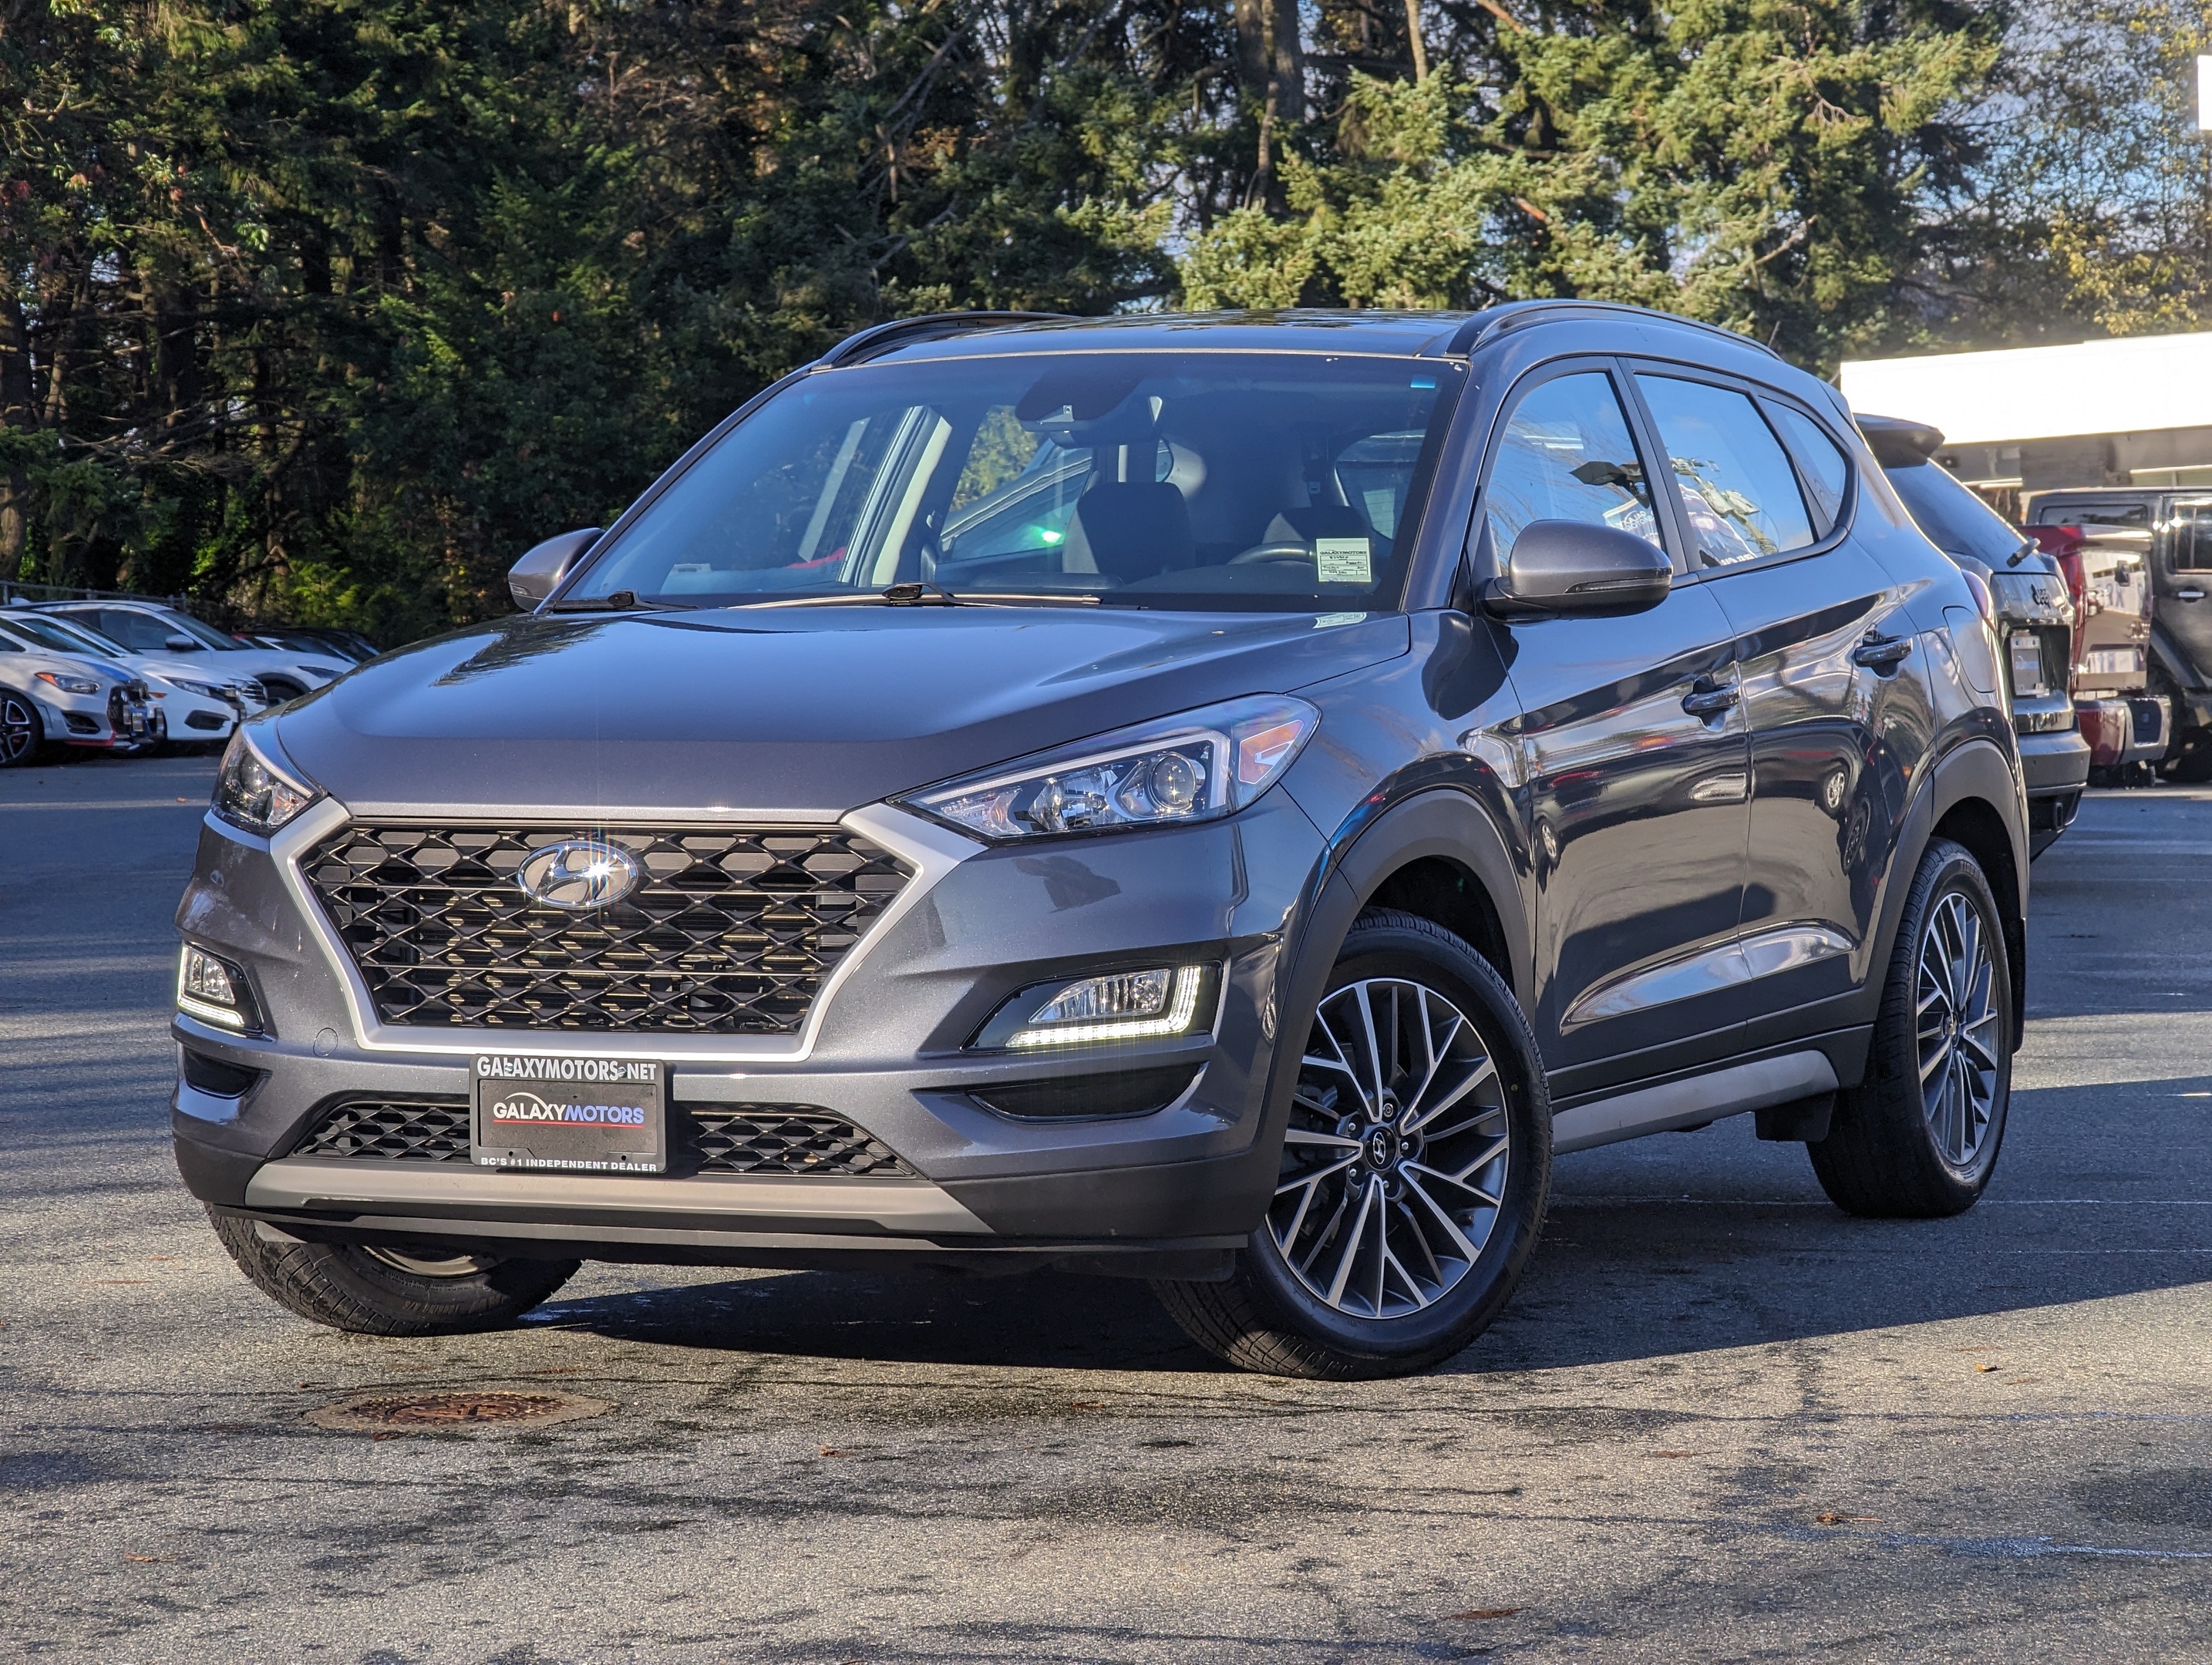 2019 Hyundai Tucson Trend Package - Sunroof, Heated F/R Seats